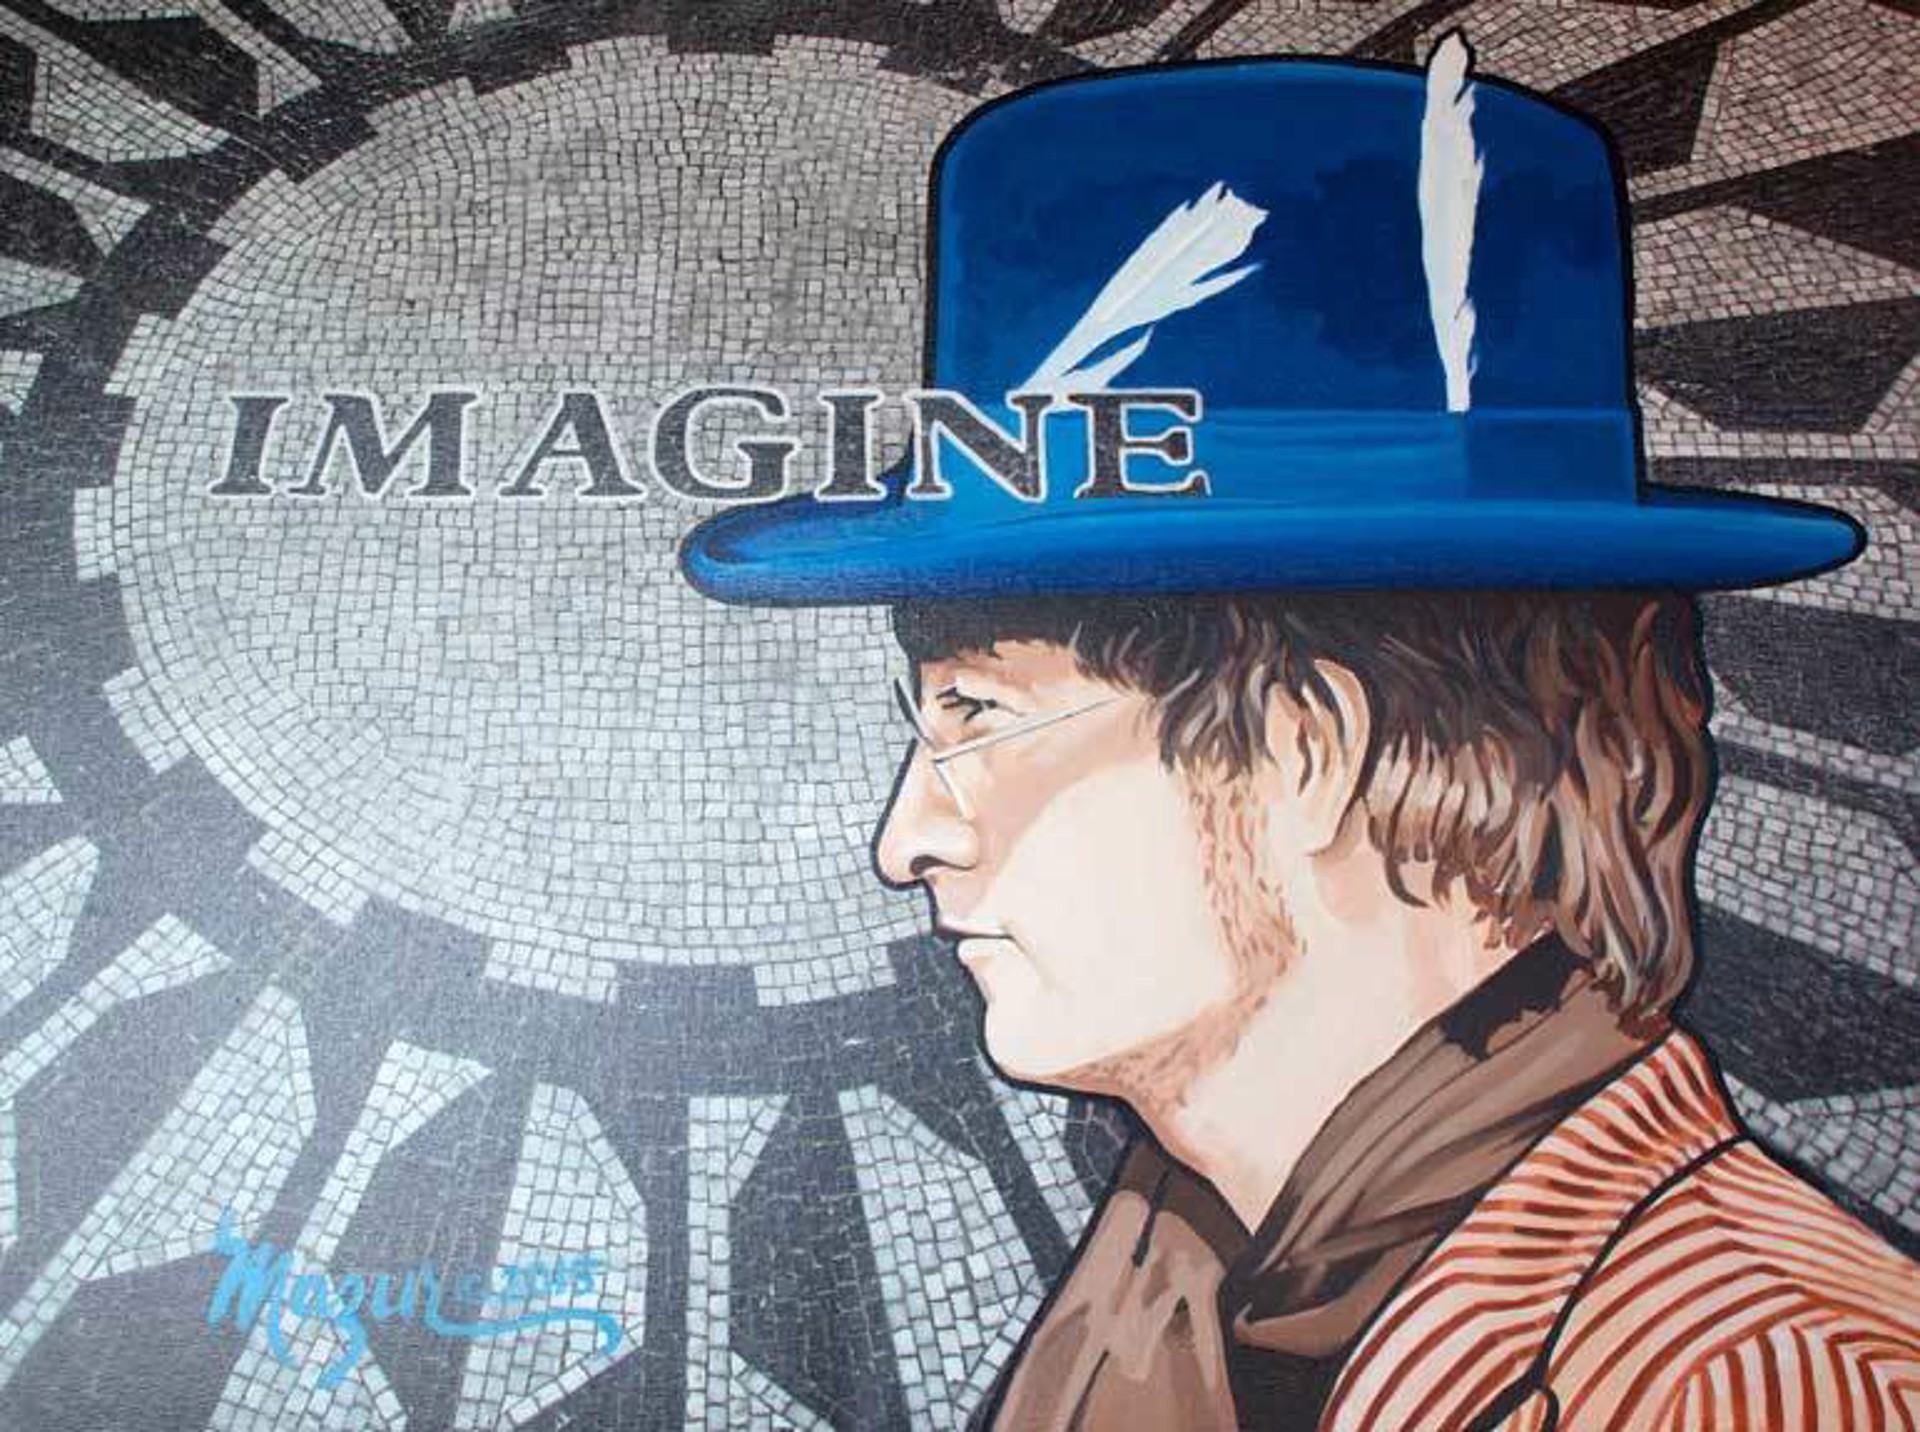 John Lennon - "Imagine" by Ruby Mazur